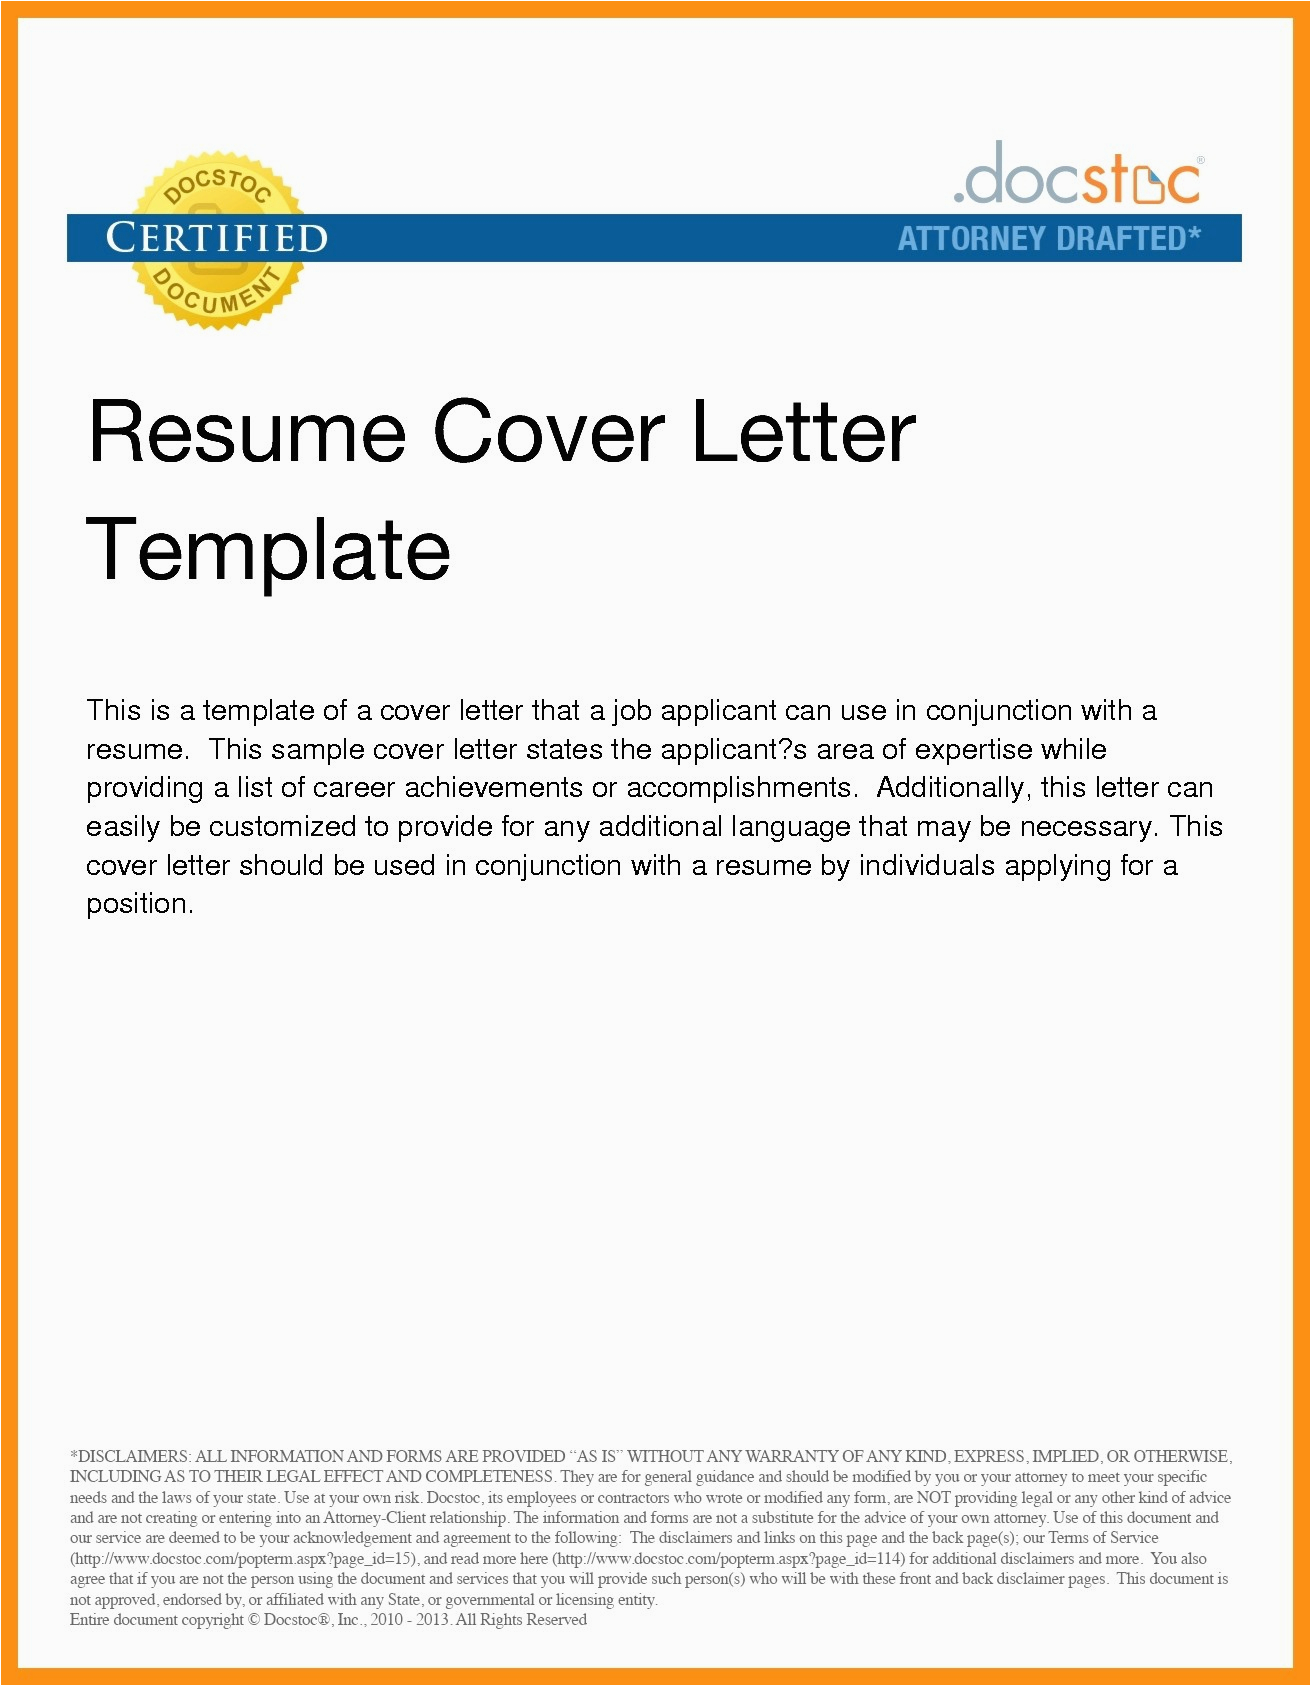 Sending Resume by Email Cover Letter Samples Sending Resume and Cover Letter by Email Collection